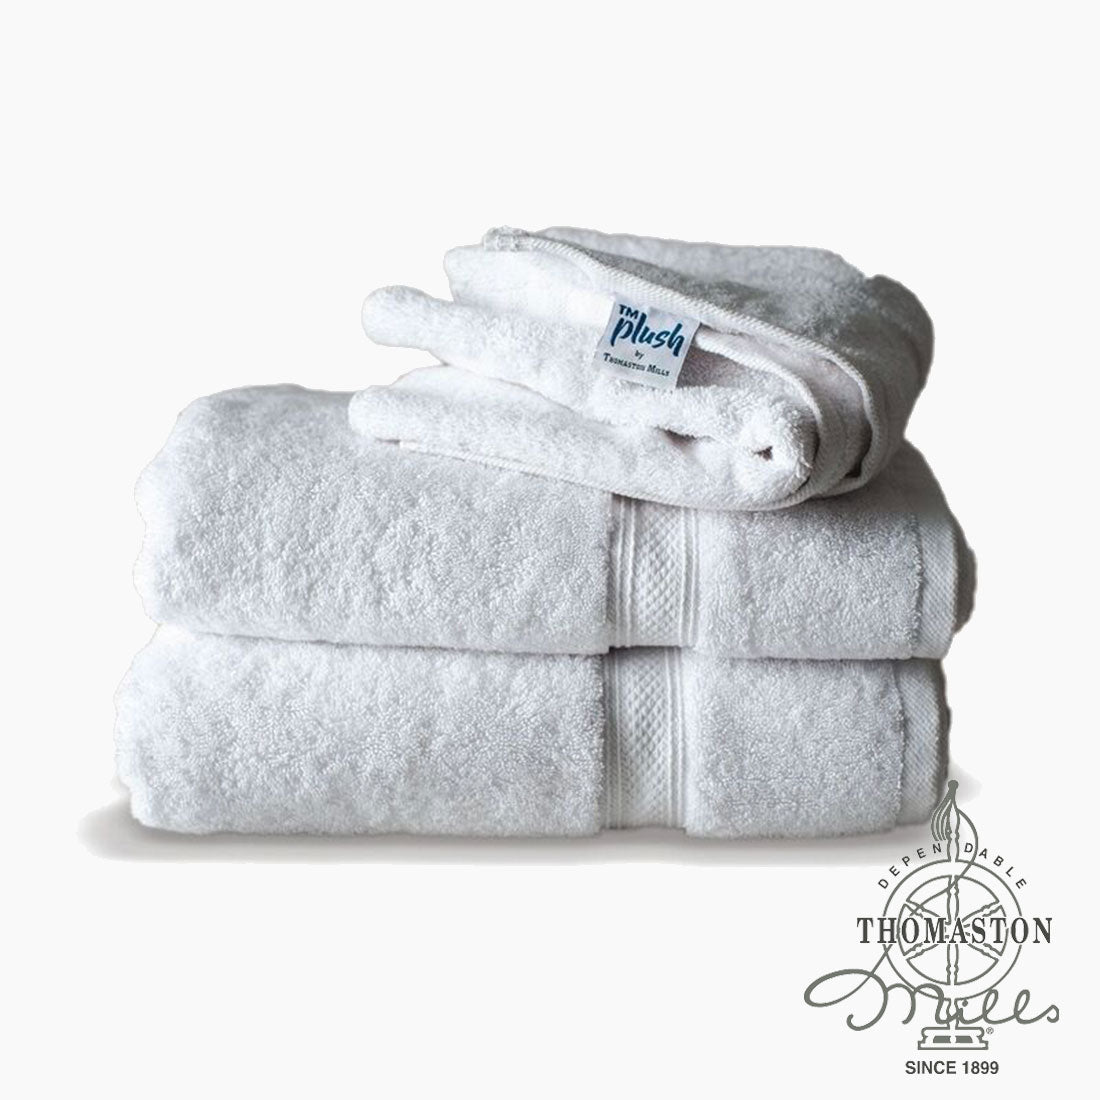 Thomaston Mills plush towels